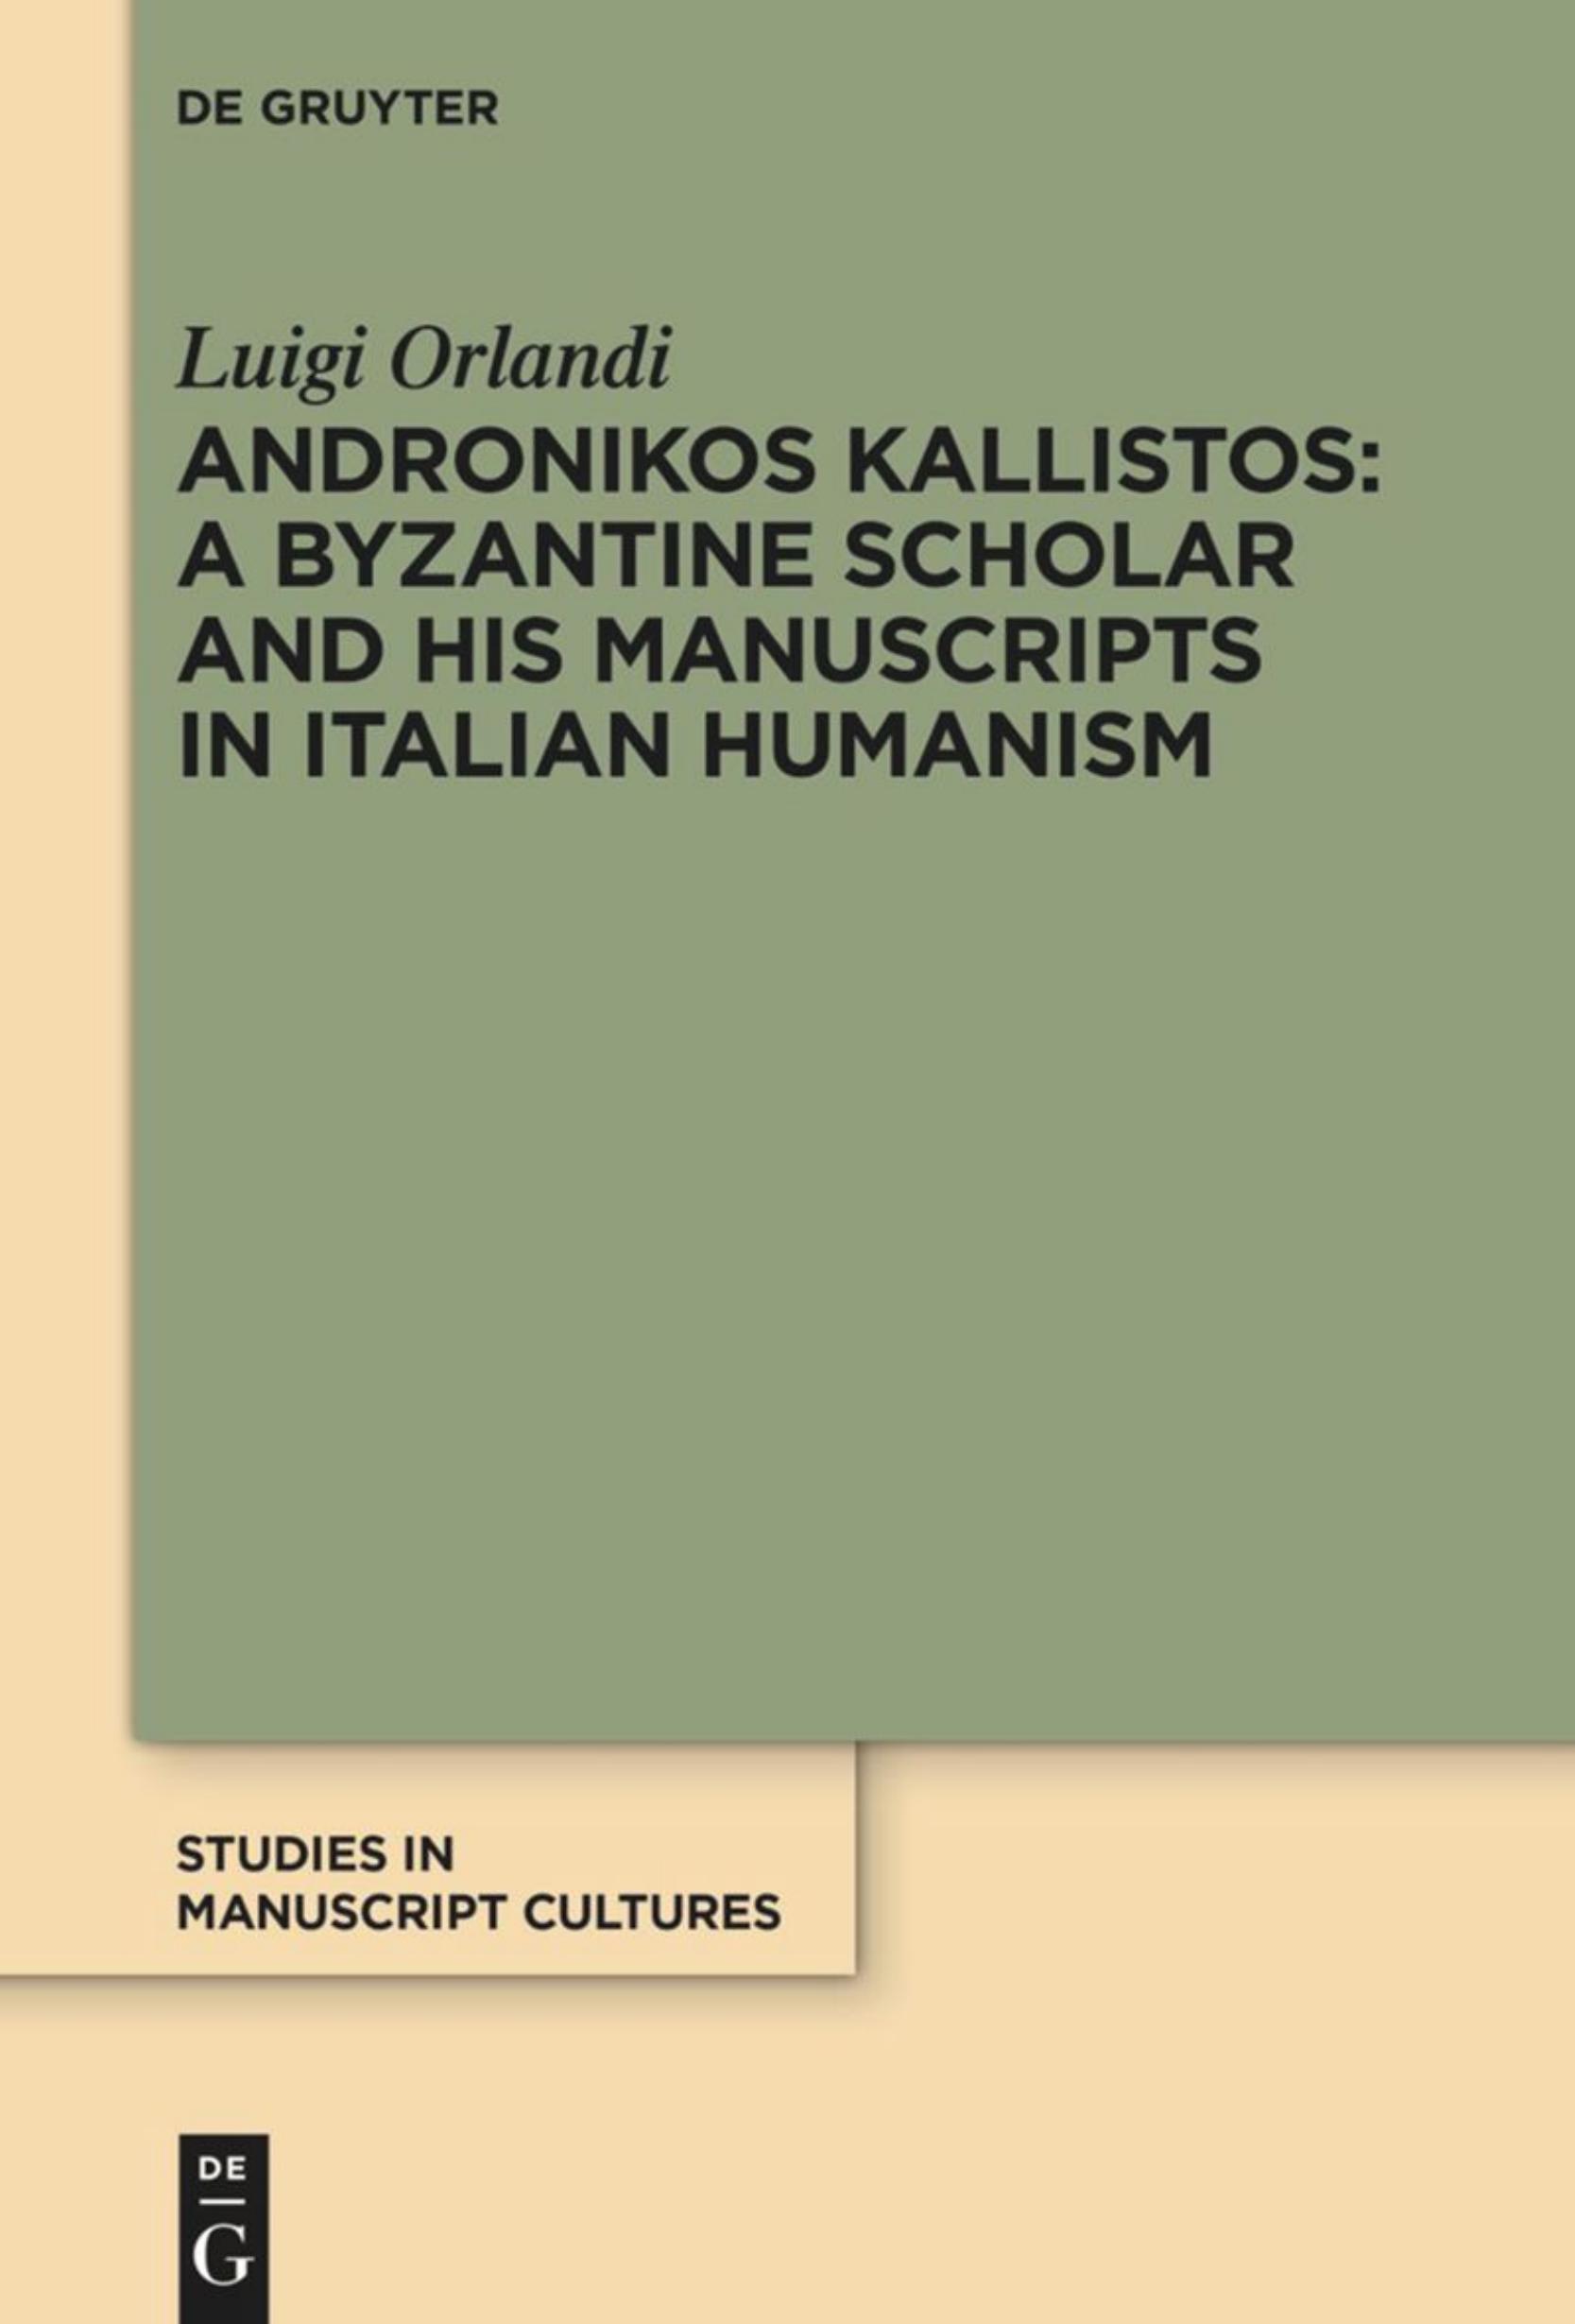 Andronikos Kallistos: A Byzantine Scholar and His Manuscripts in Italian Humanism by Luigi Orlandi